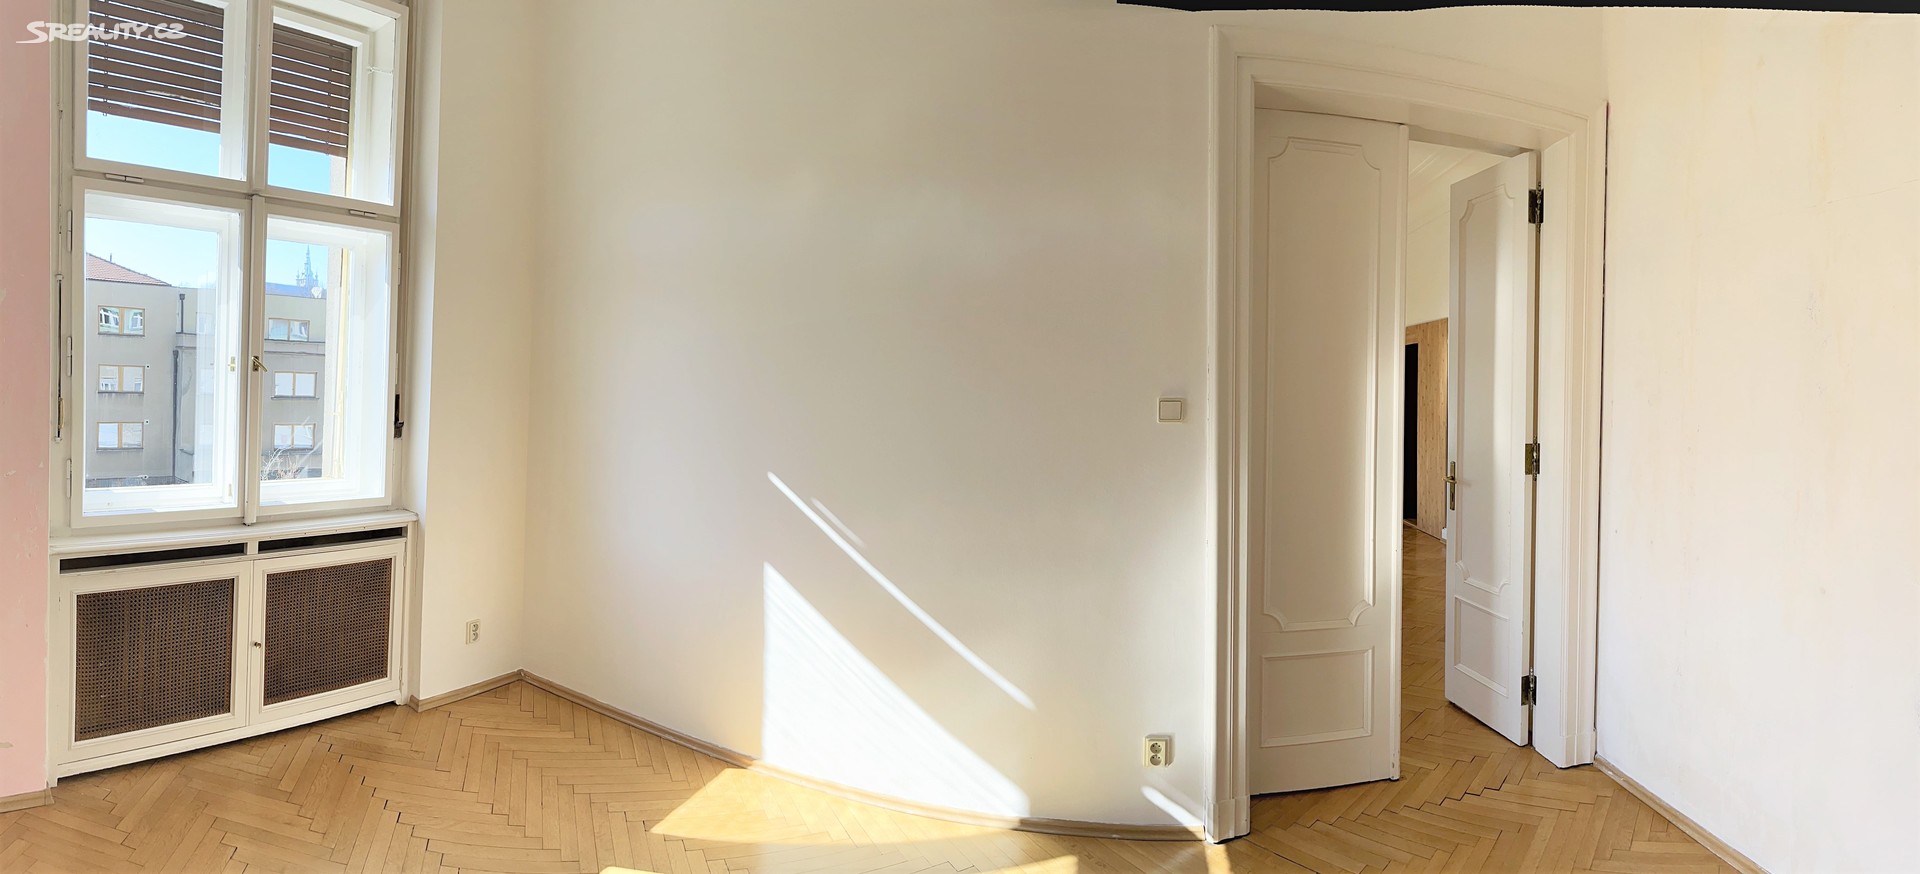 Pronájem bytu 2+1 82 m², Tychonova, Praha 6 - Hradčany